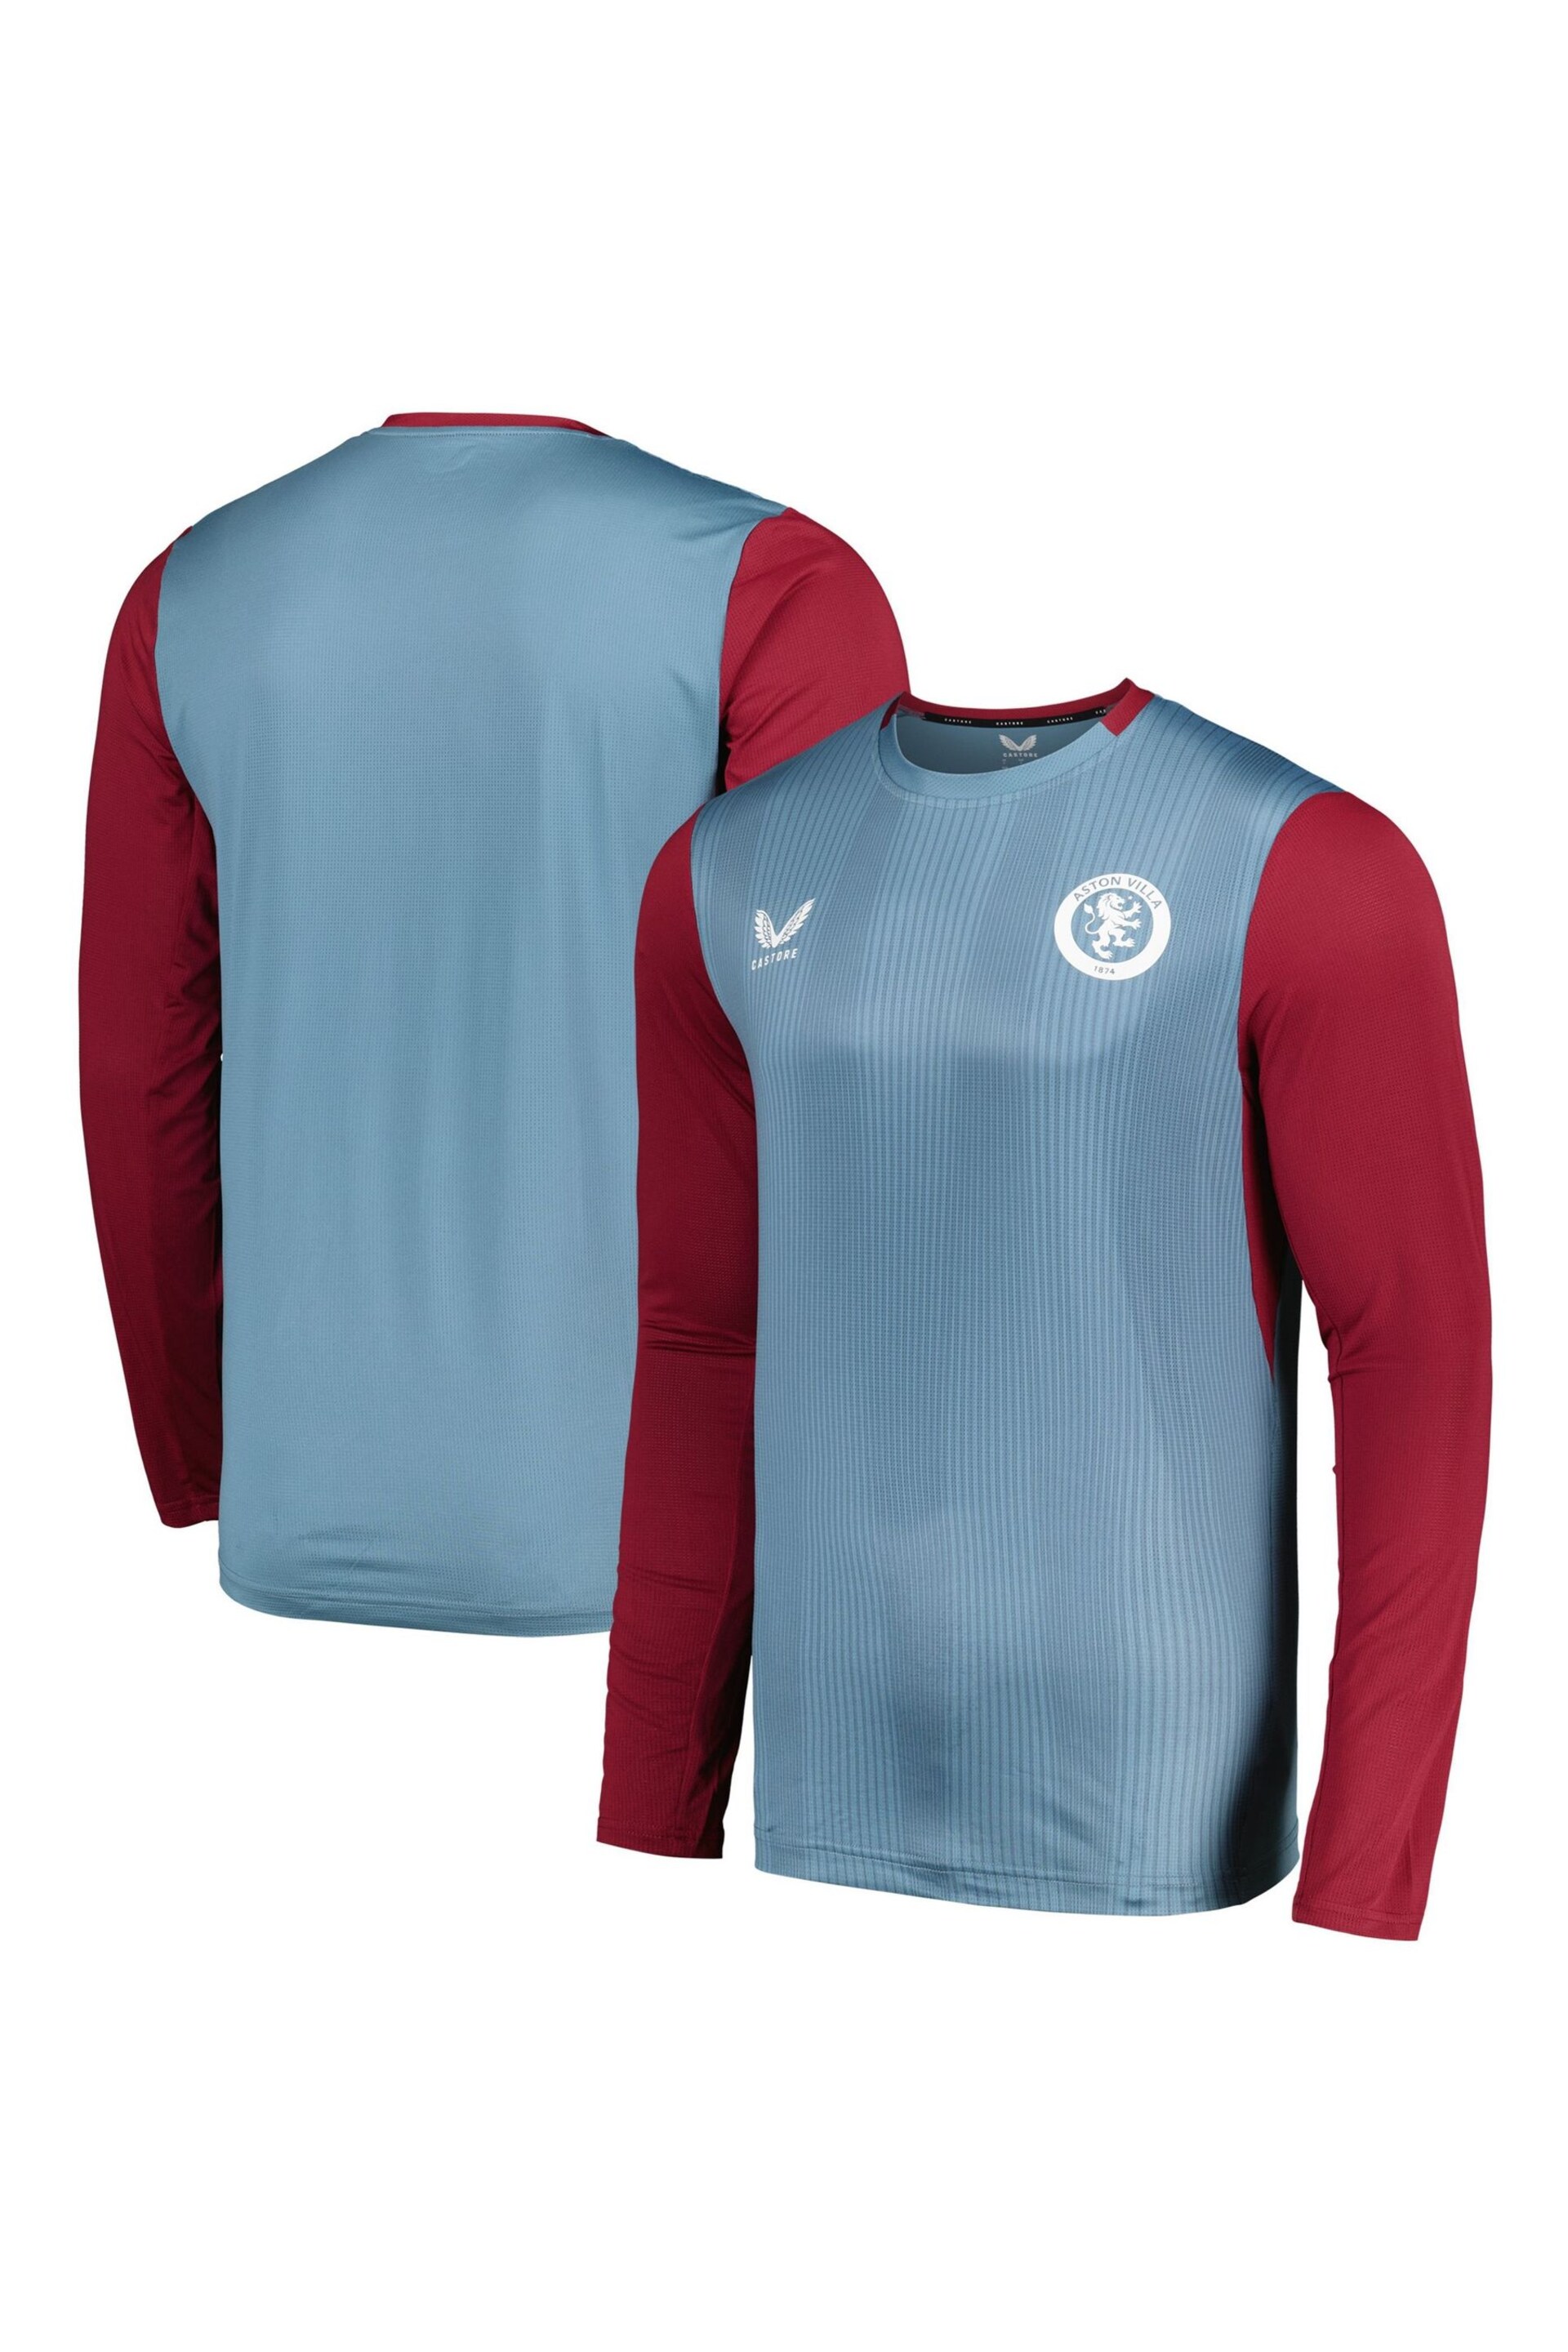 Castore Blue Long Sleeve Aston Villa Players Training Top - Image 1 of 3